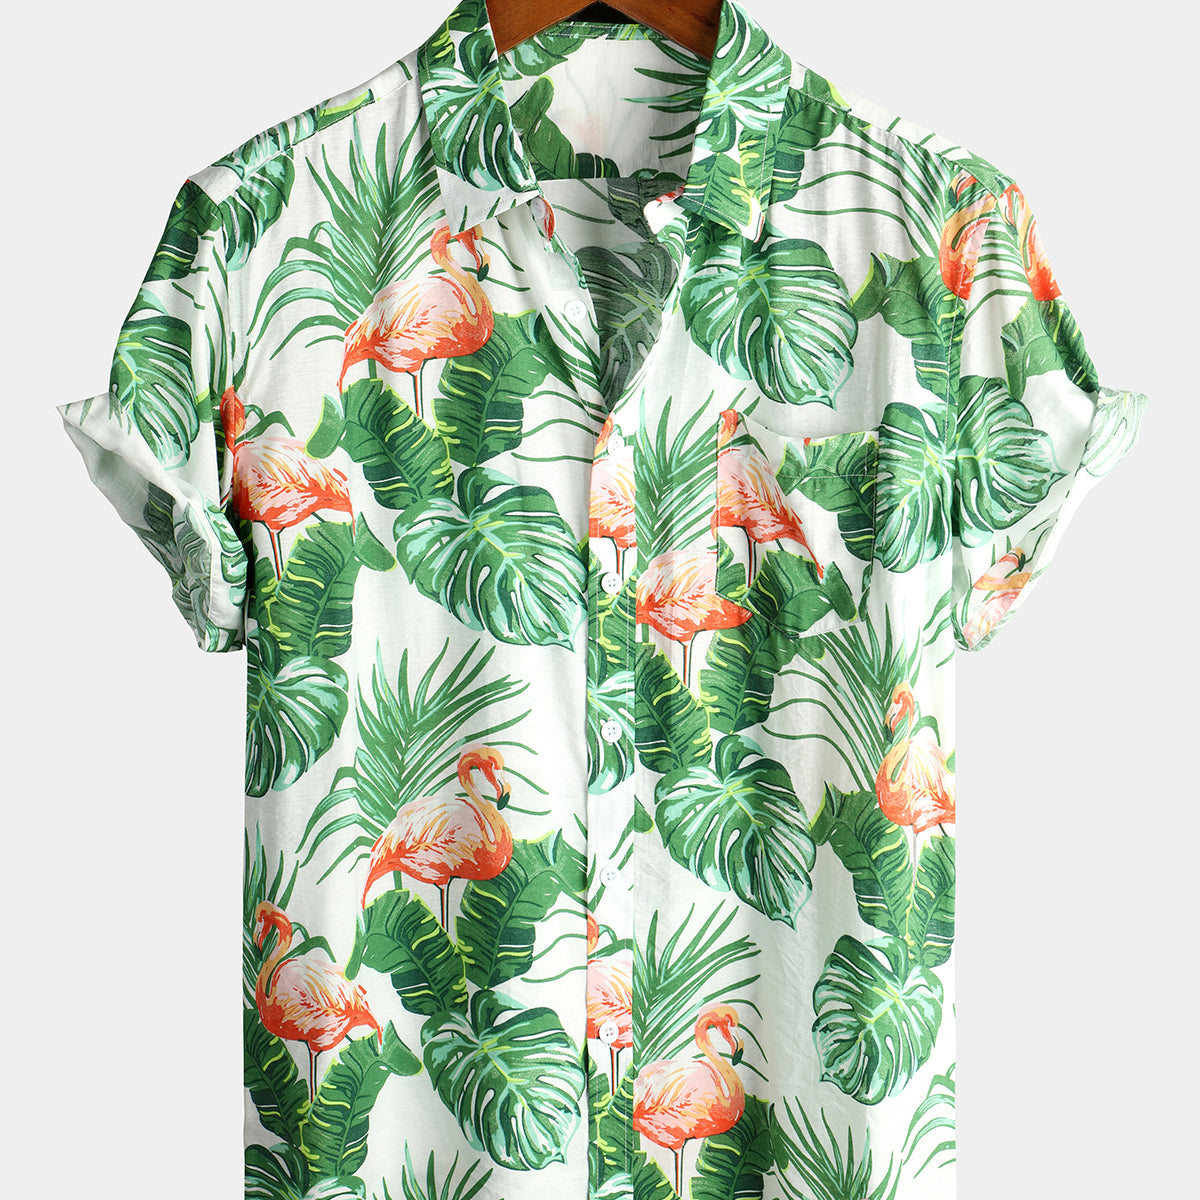 Men's Holiday Short Sleeve Cotton Tropical Flamingo Shirt